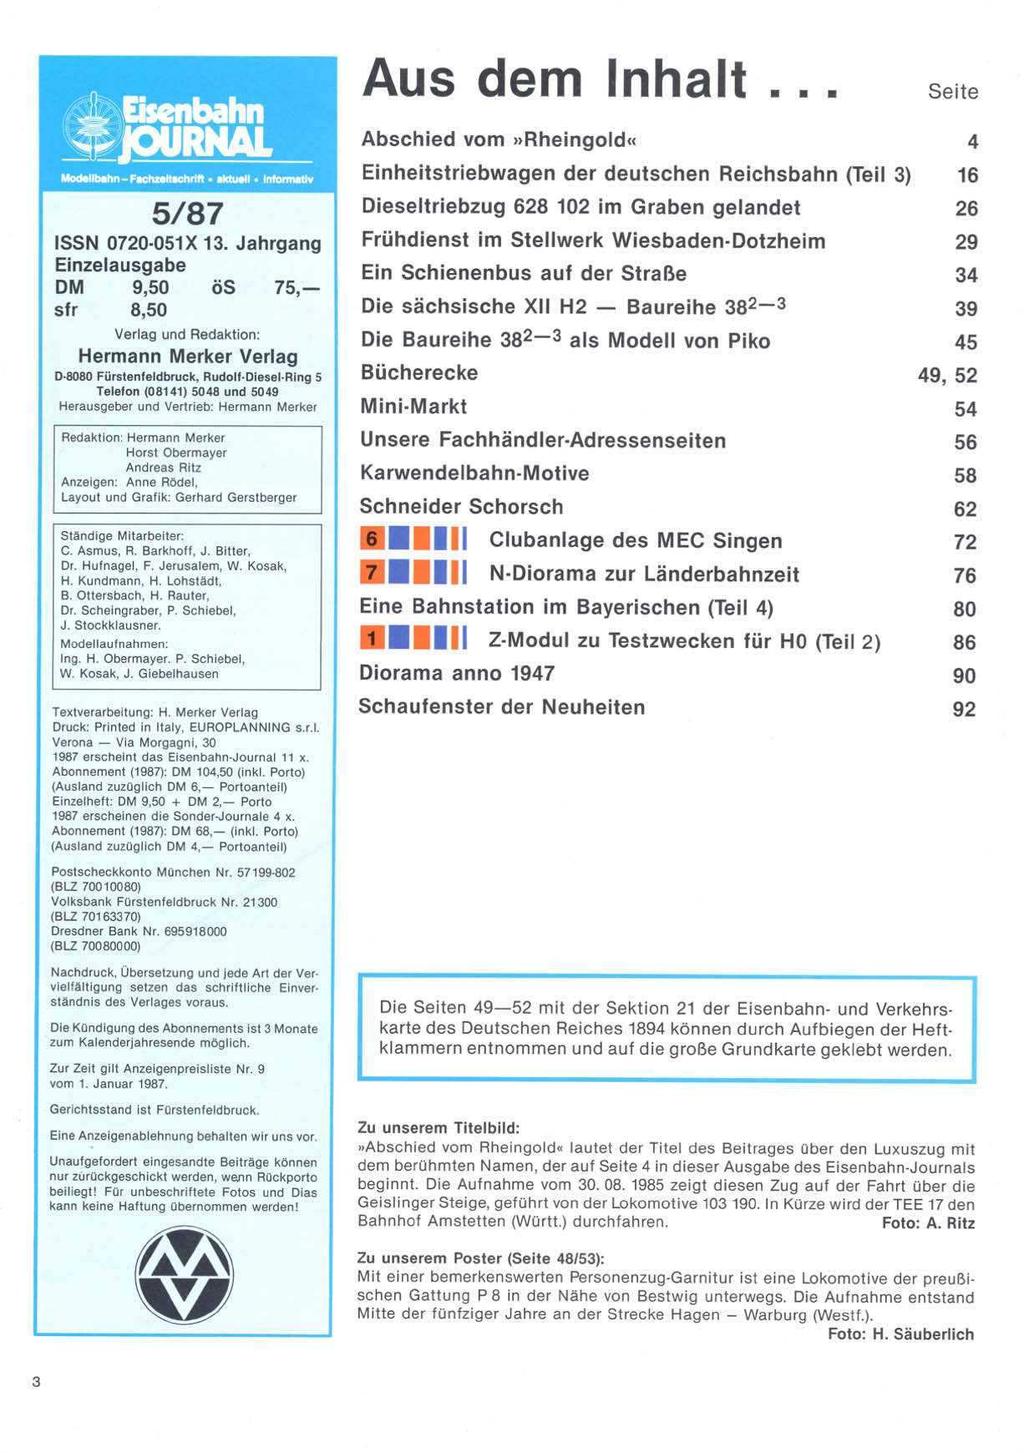 Aus dem Inhalt n n n Seite >N ~720.051X 13. Jahrgang Izelausgabe DM 9,50 ös 75,- sfr 8,50 Hermann Verlag und Redaktion: Merker Verlag 80 Fürstenfeldbruck, Rudolf.